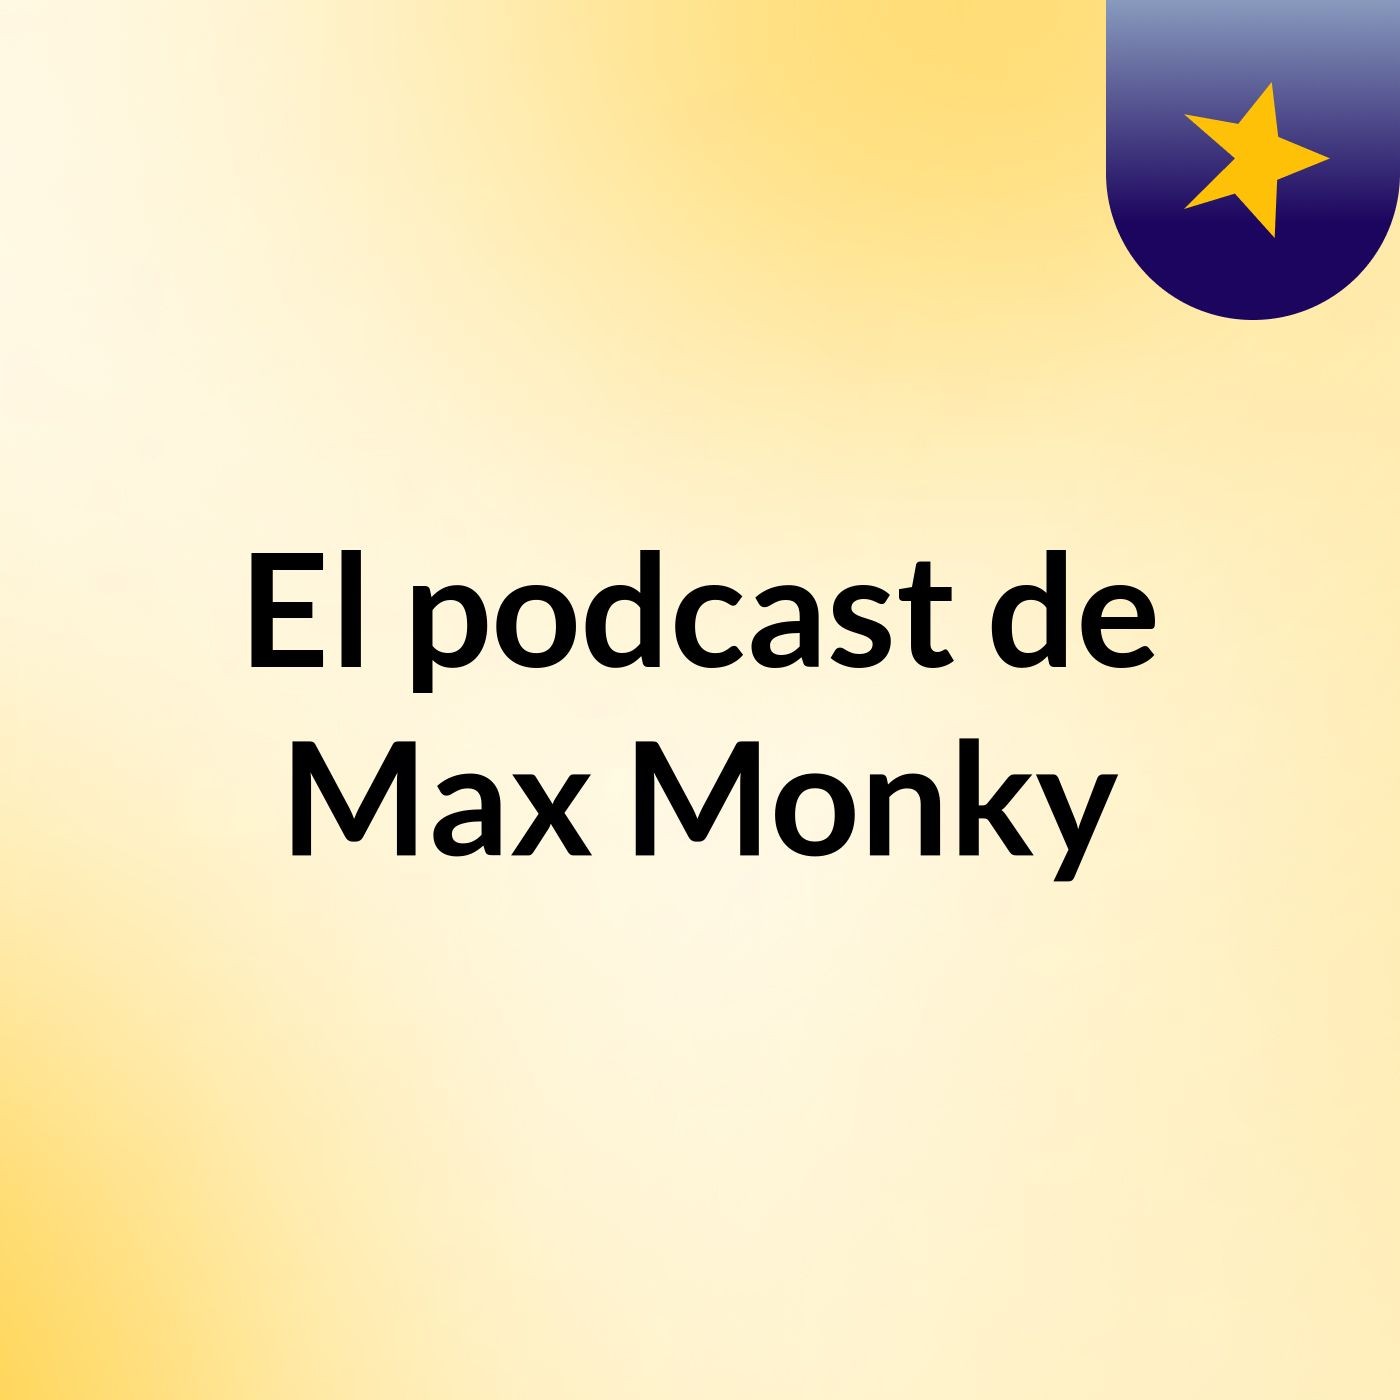 Episodio 4 - El podcast de Max Monky